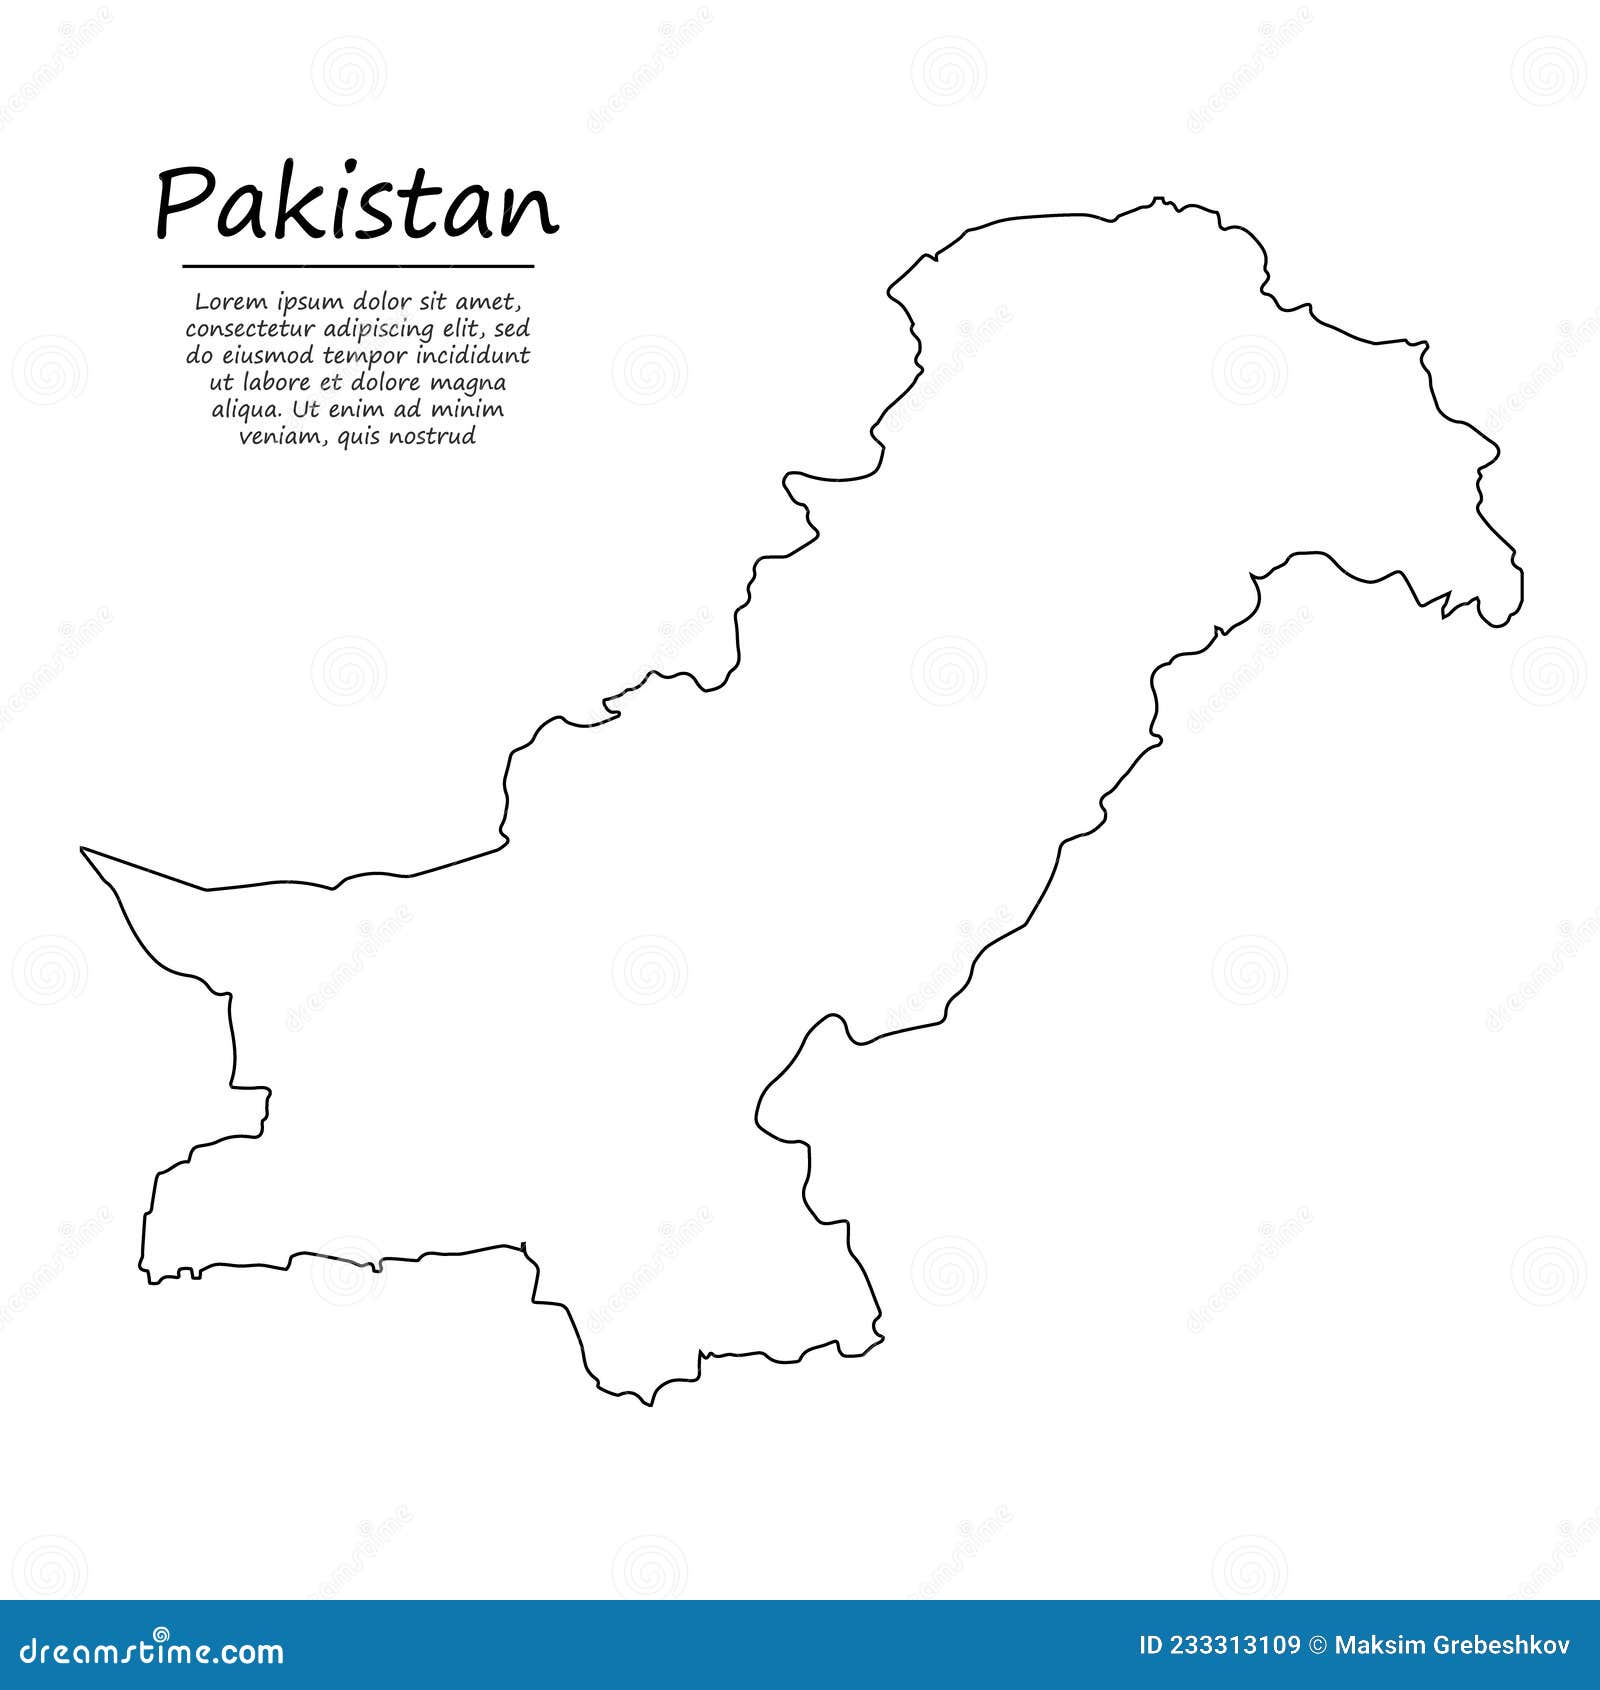 Pakistan Map Drawing